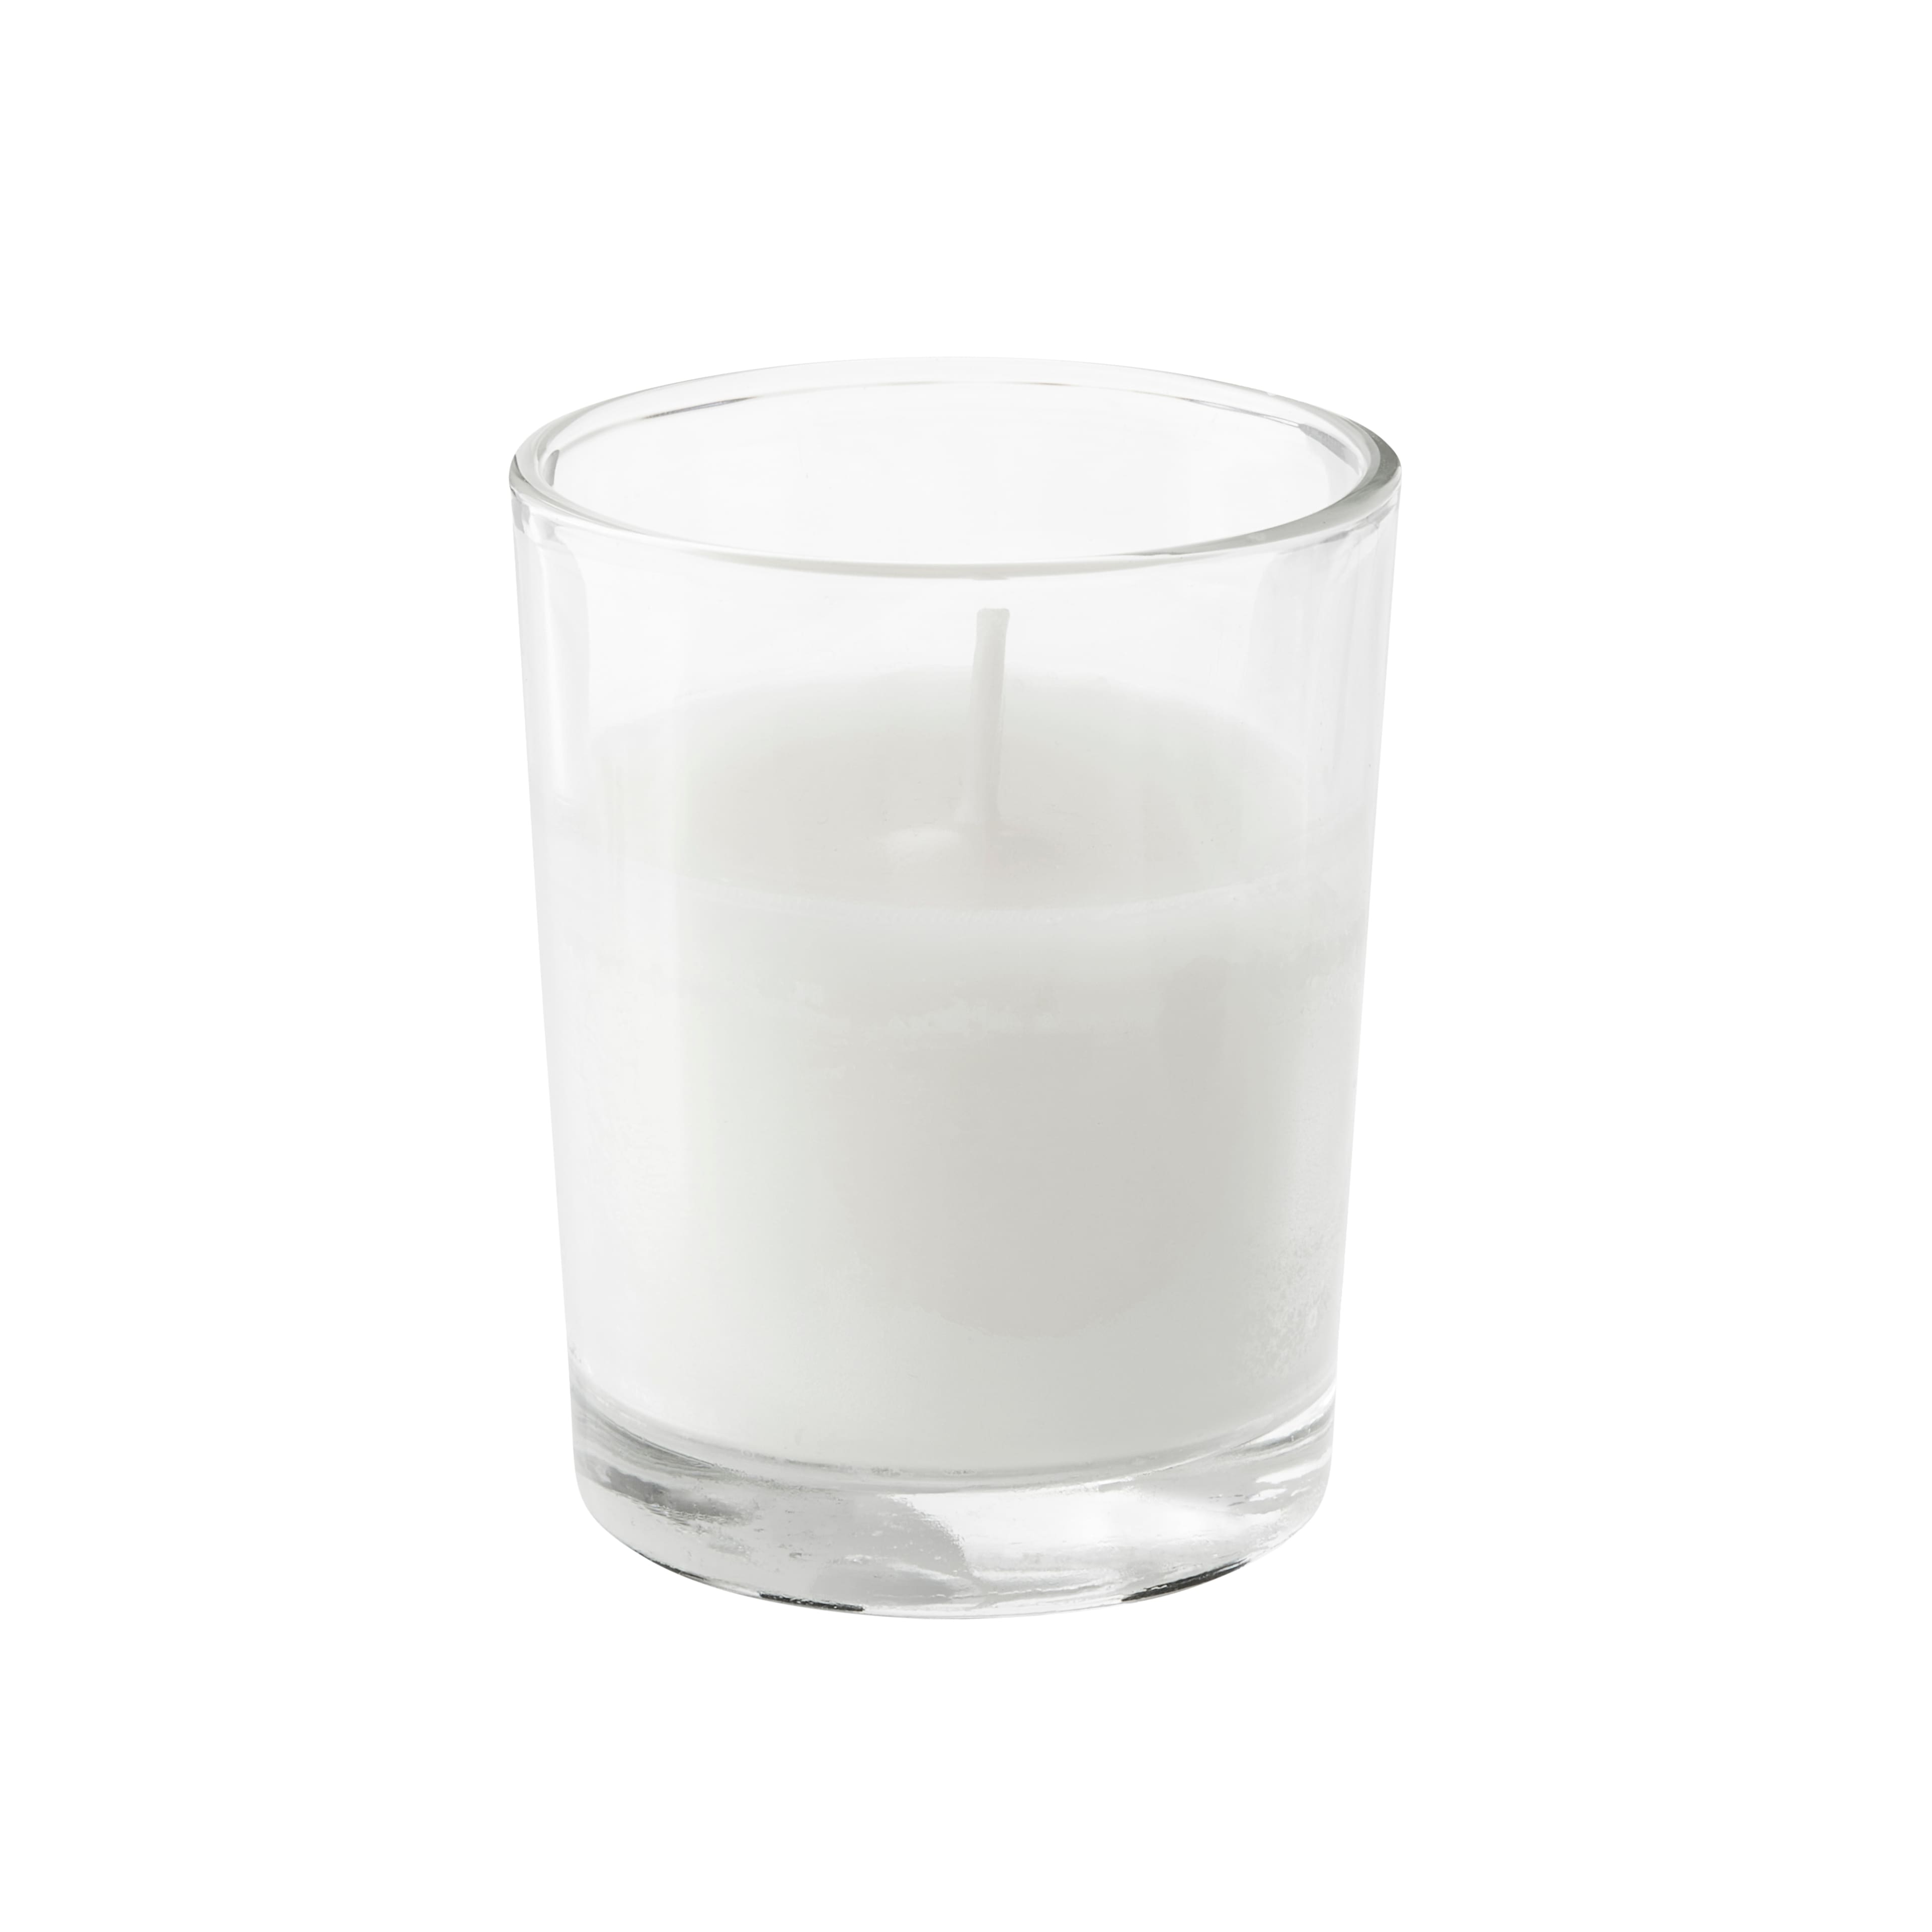 Basic Elements™ Glass Votive Candles by Ashland®